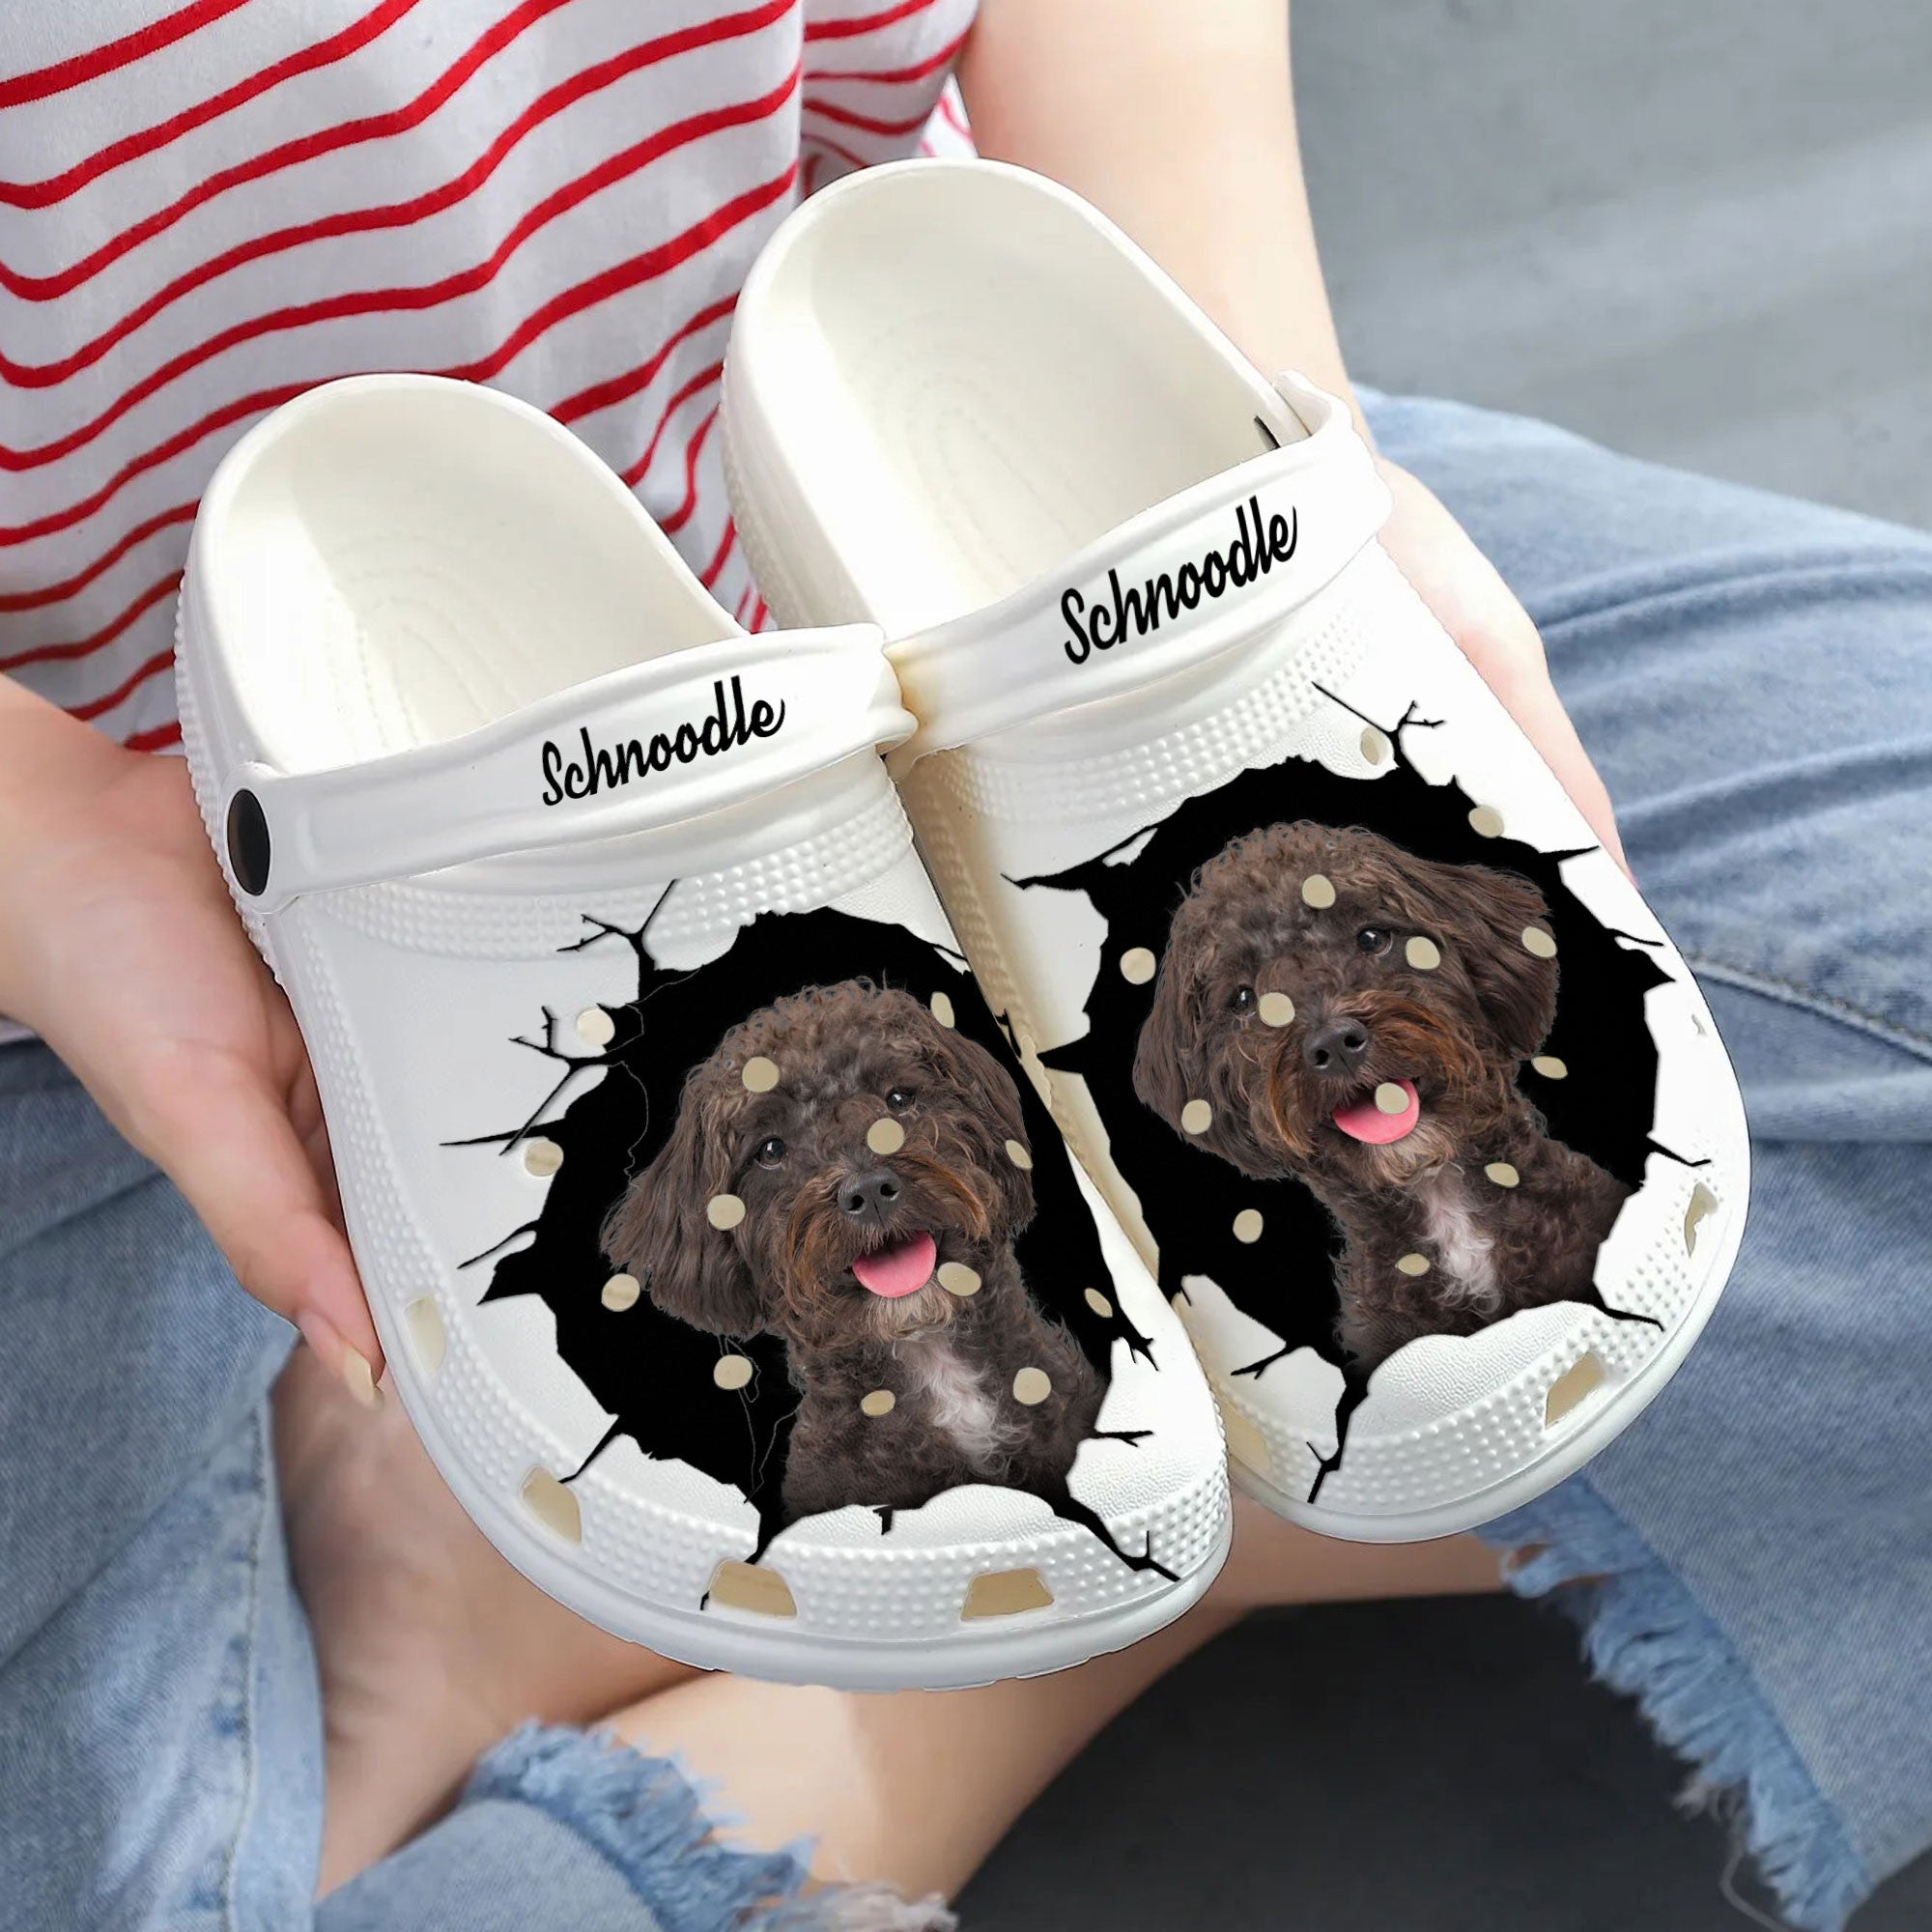 Schnoodle - 3D Graphic Custom Name Crocs Shoes